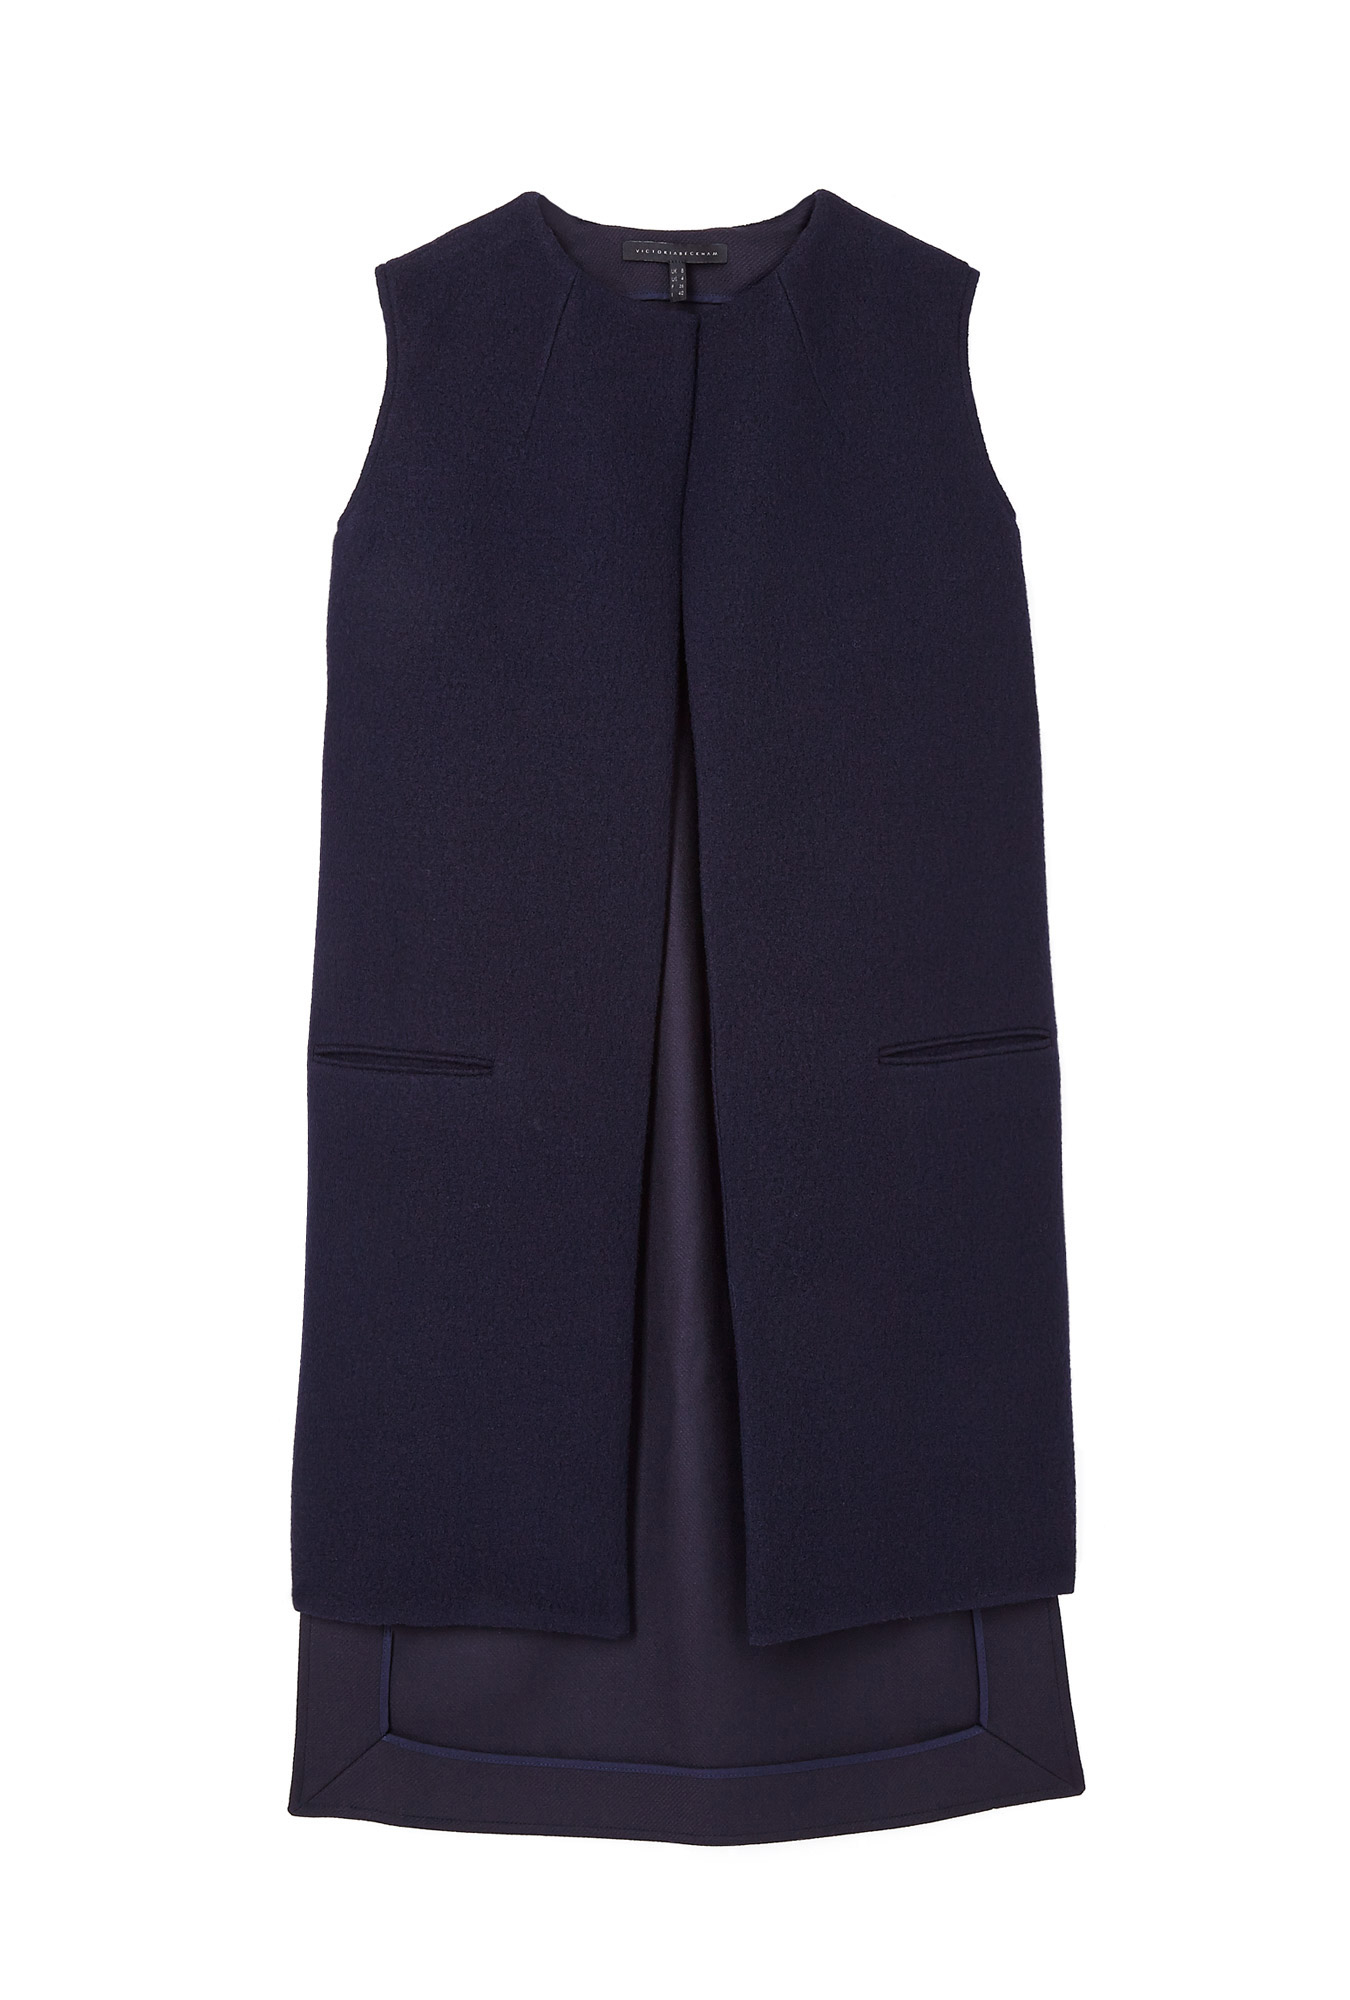 Victoria Beckham Sleeveless Boiled Wool Coat in Blue (denim) | Lyst